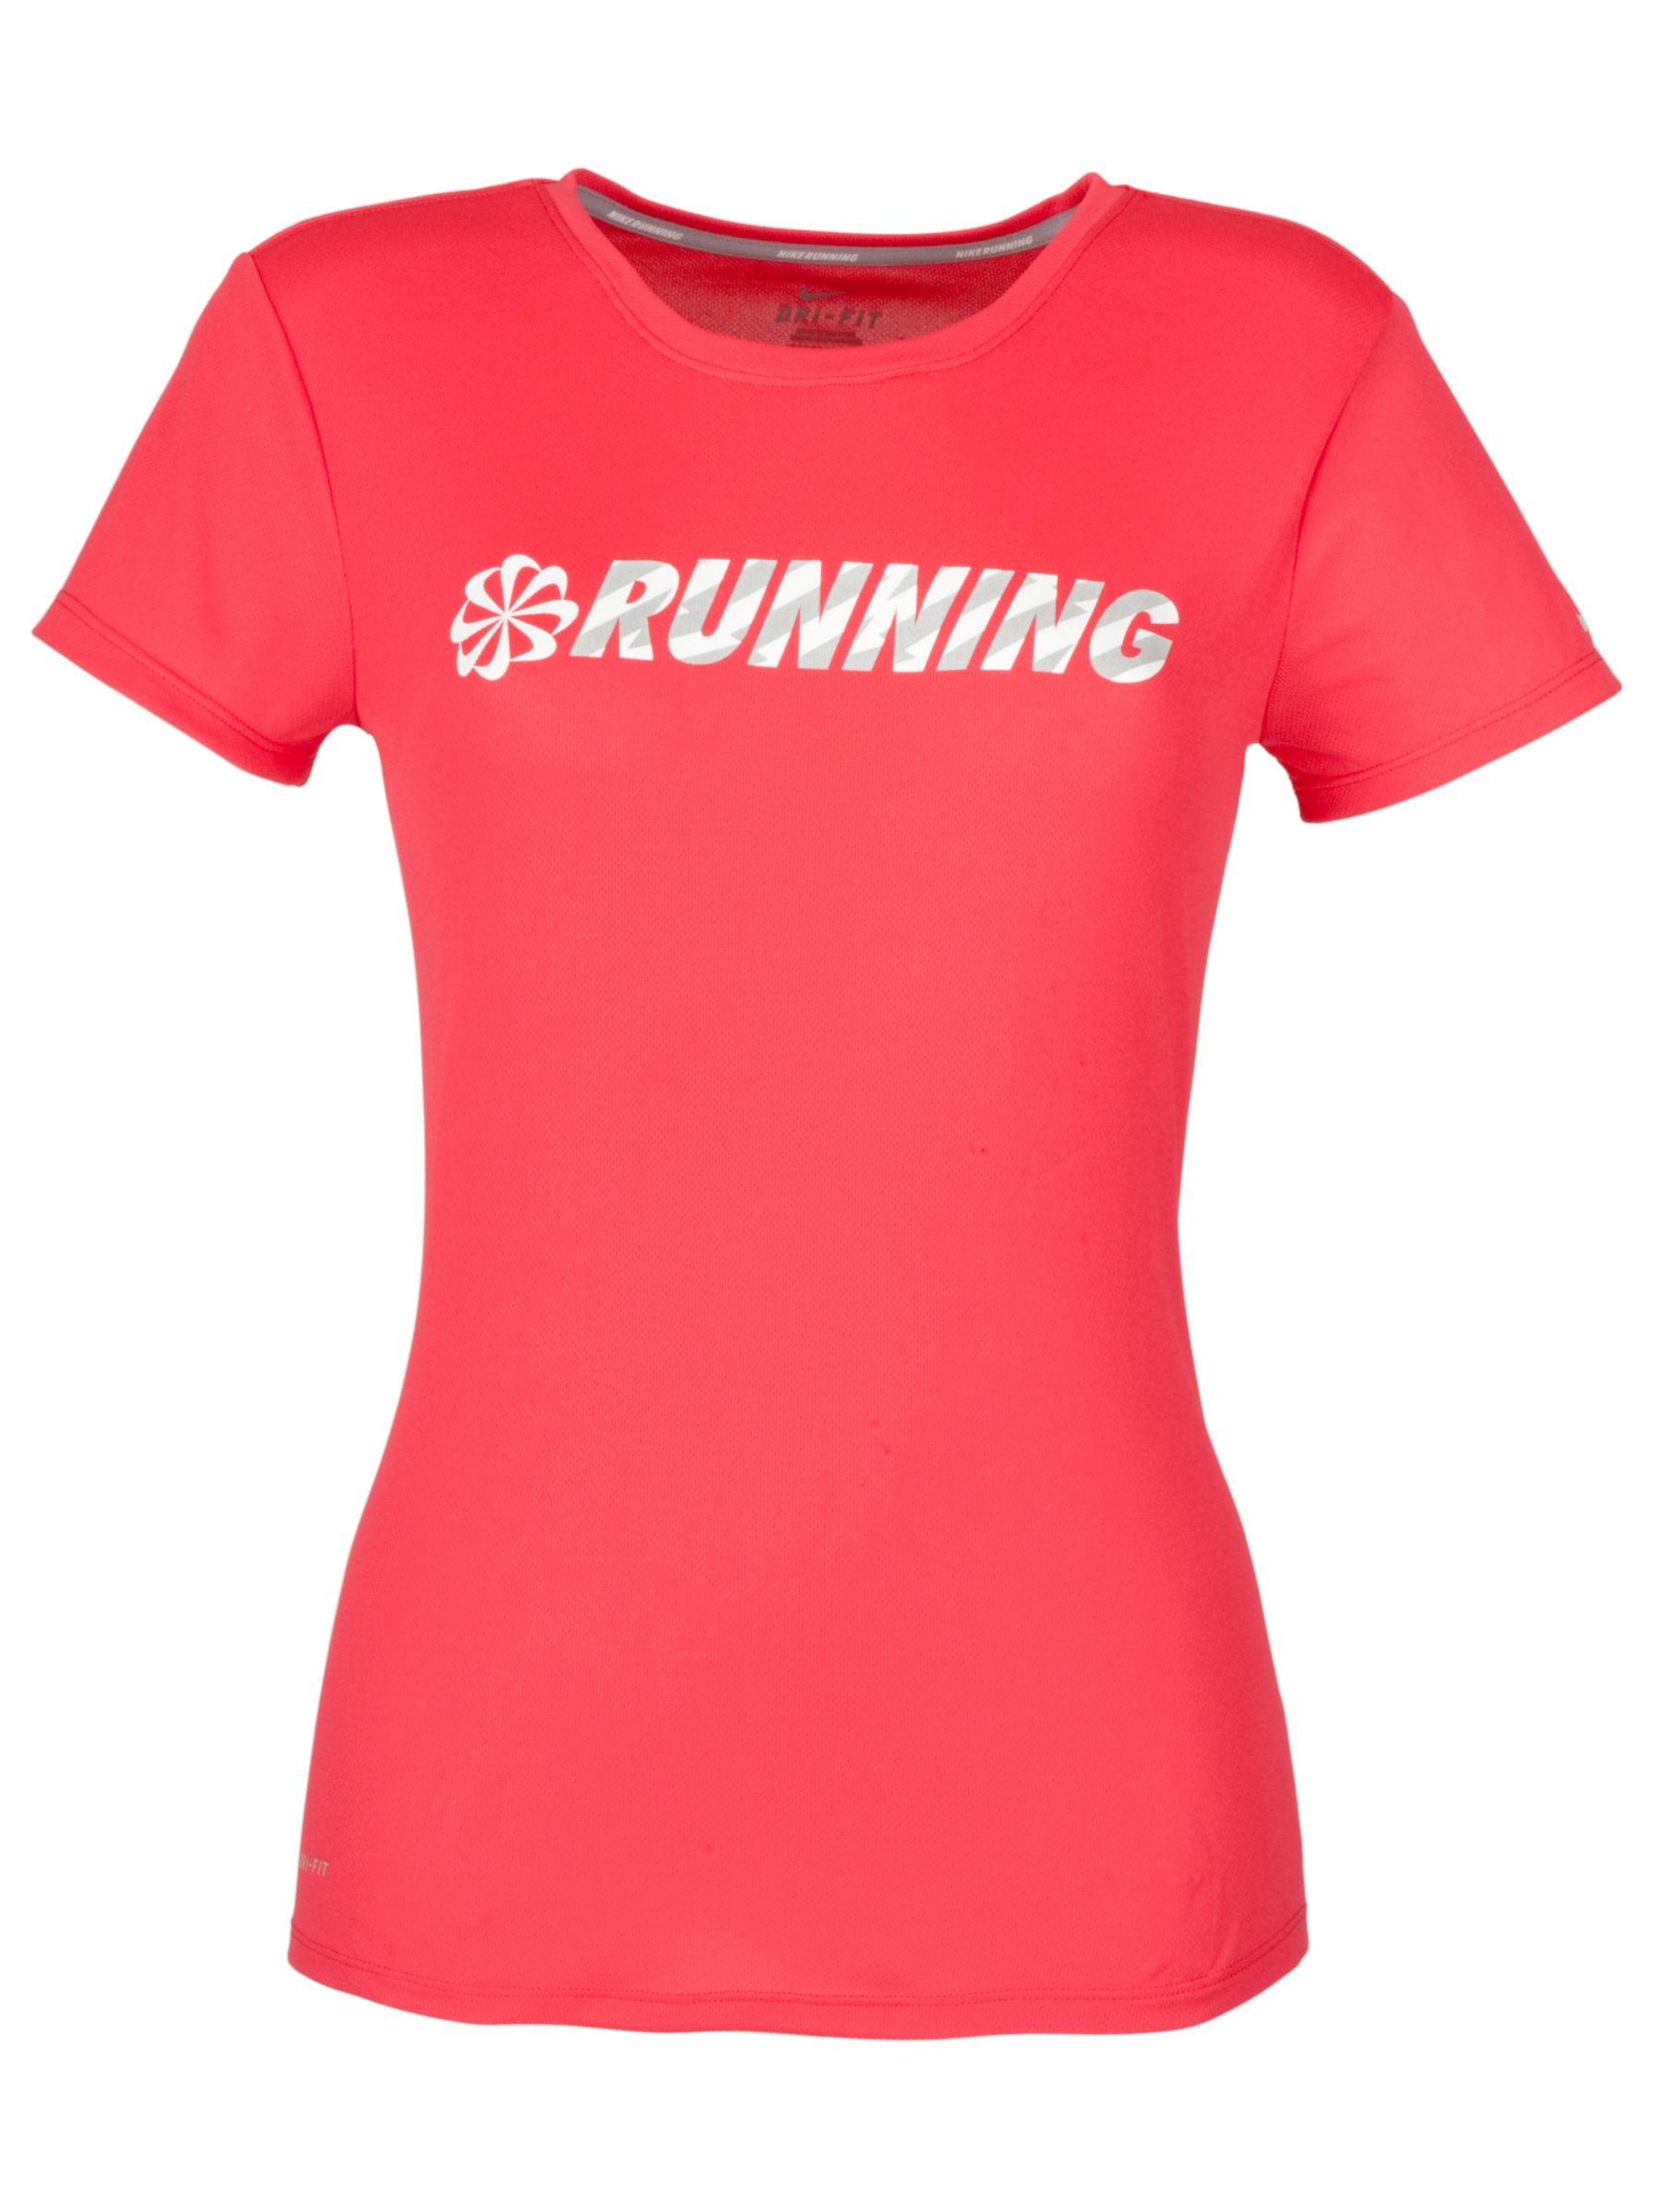 Challenger Run Graphic T-Shirt, Scarlet Fire